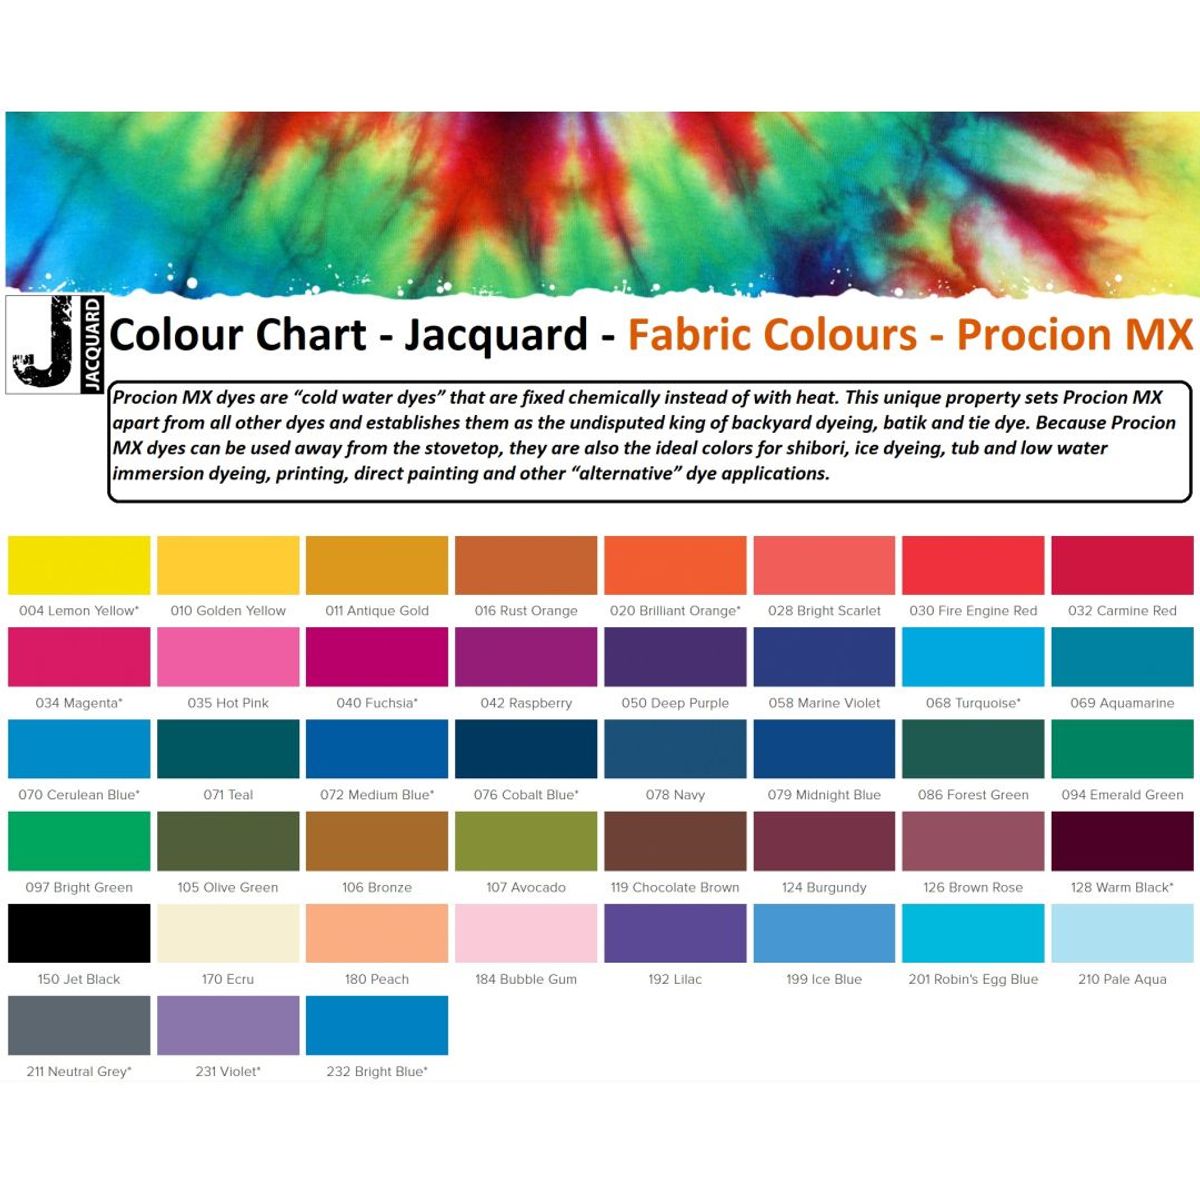 Jacquard - Procion MX Dye - Fabric Textile - Raspberry 042